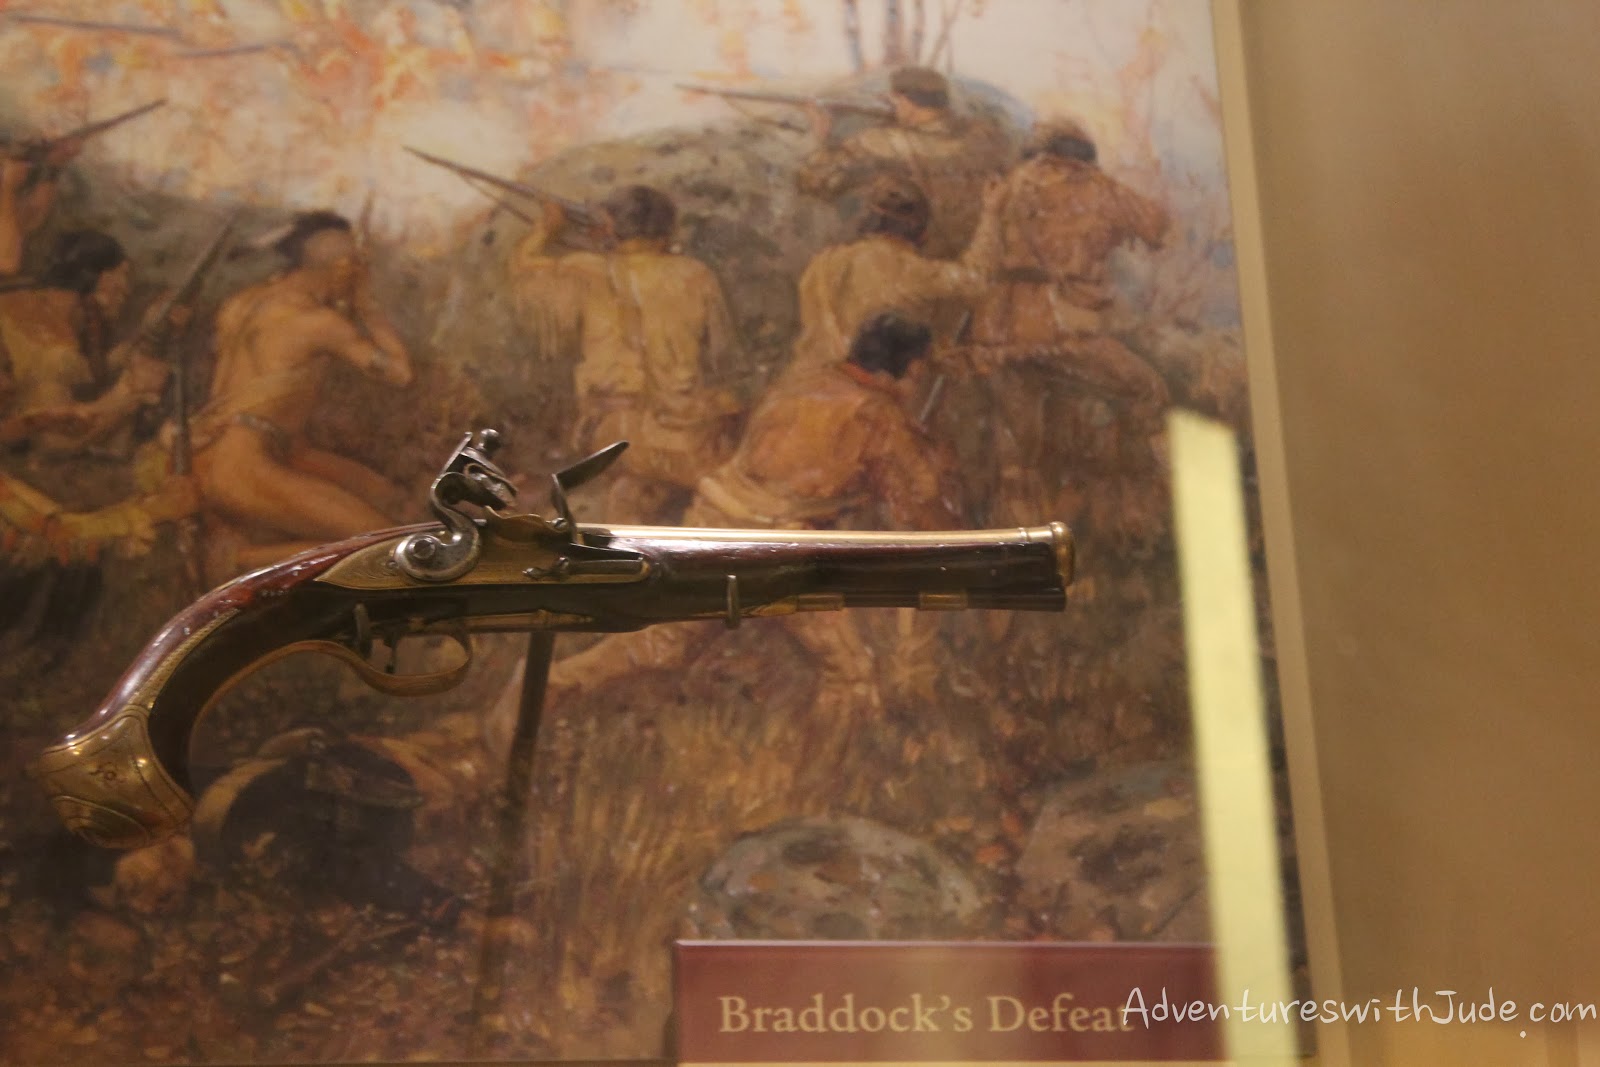 General Braddock's pistol, given to George Washington